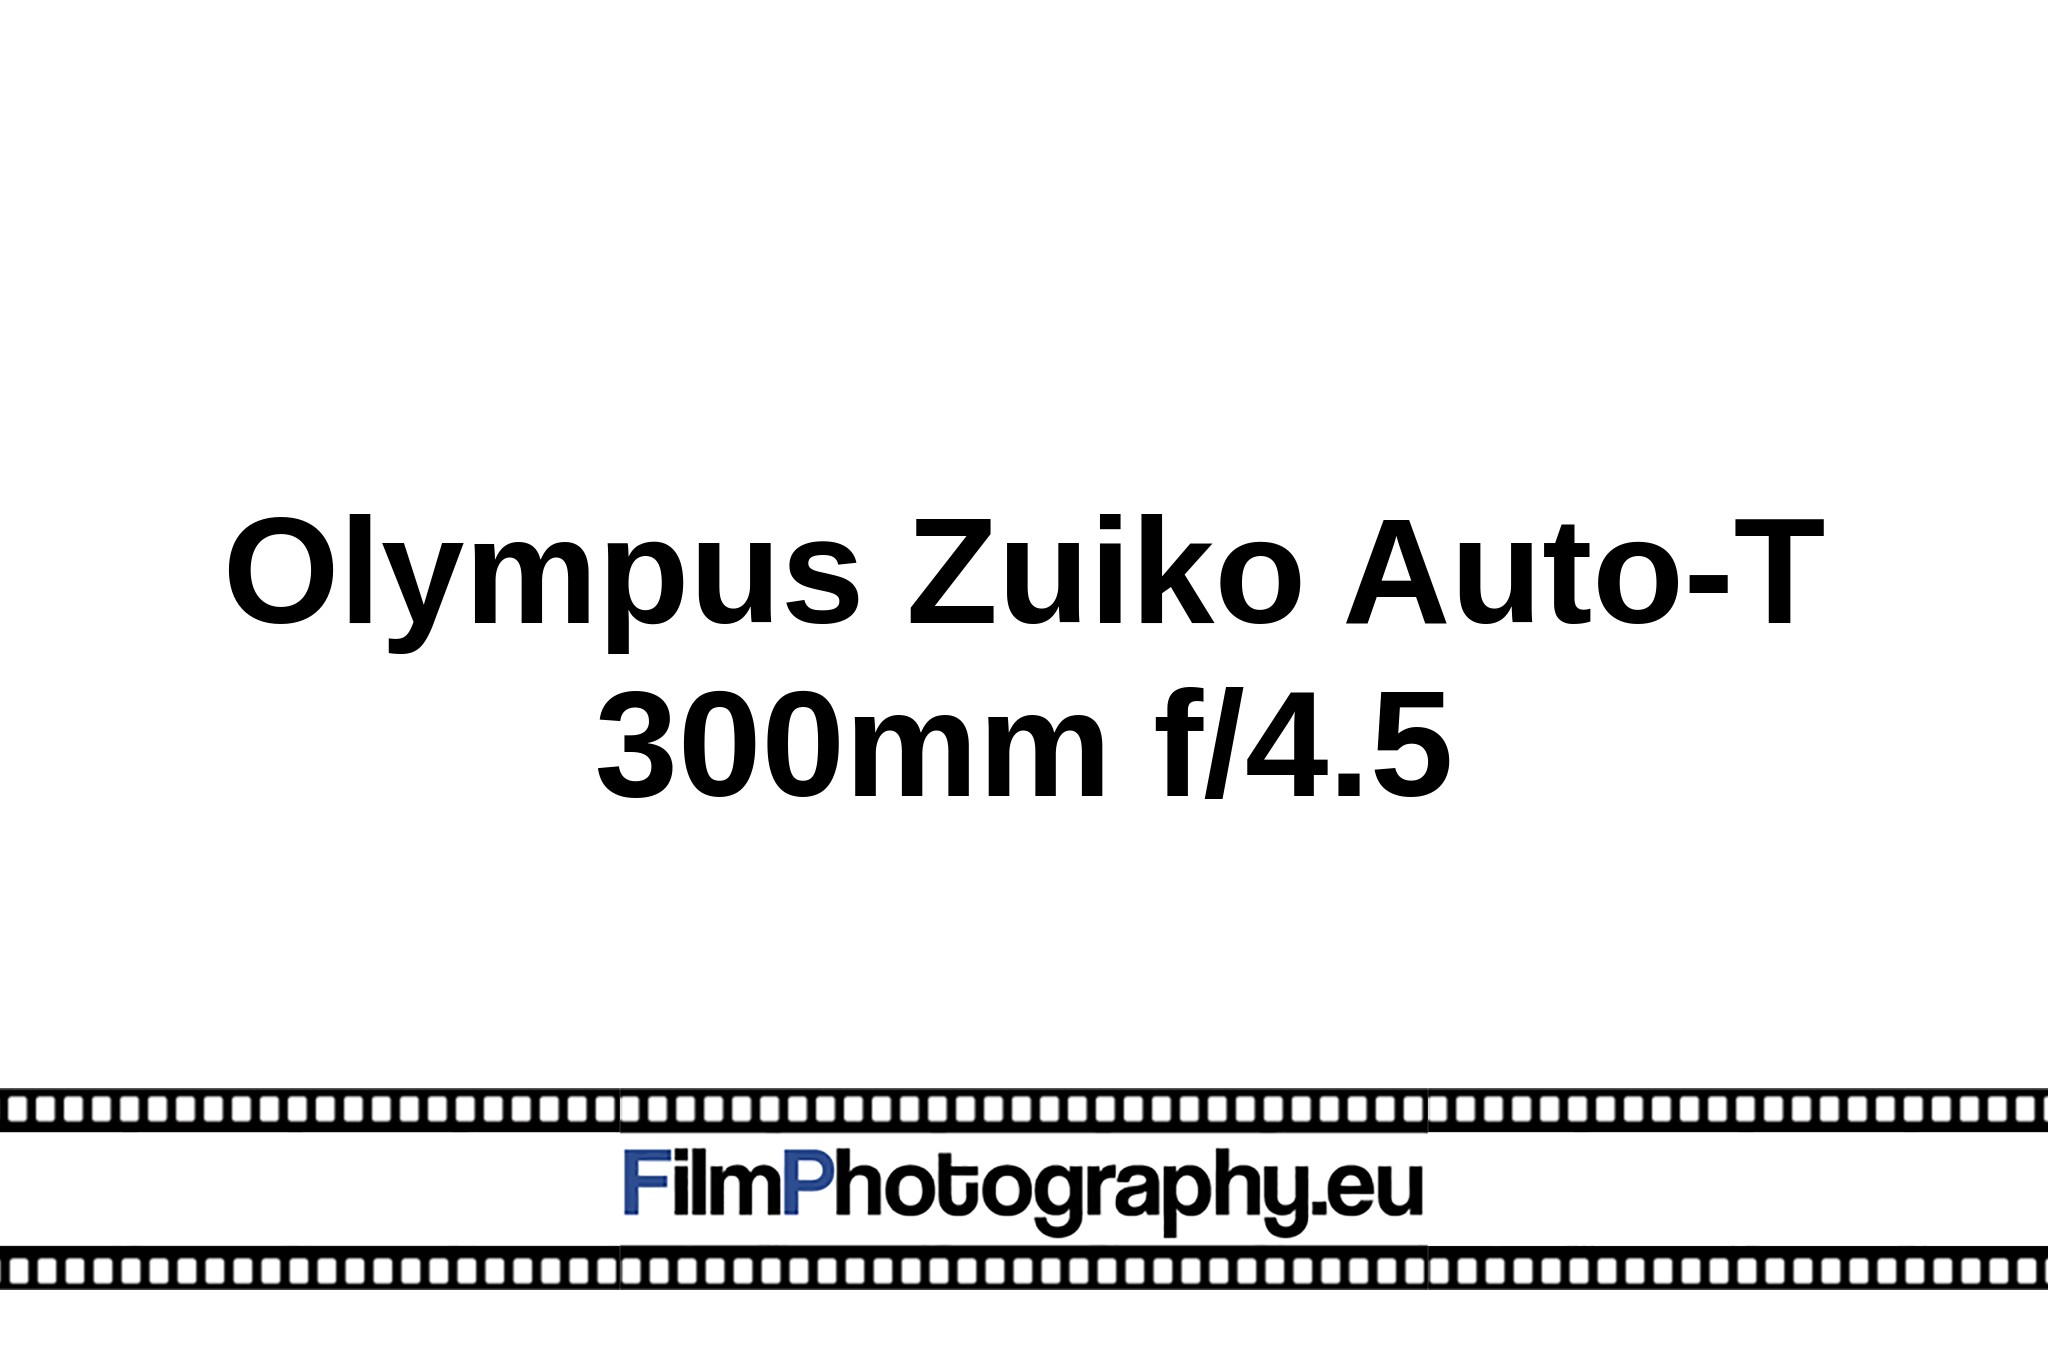 Olympus Zuiko Auto-T 300mm f/4.5 - Background to lens